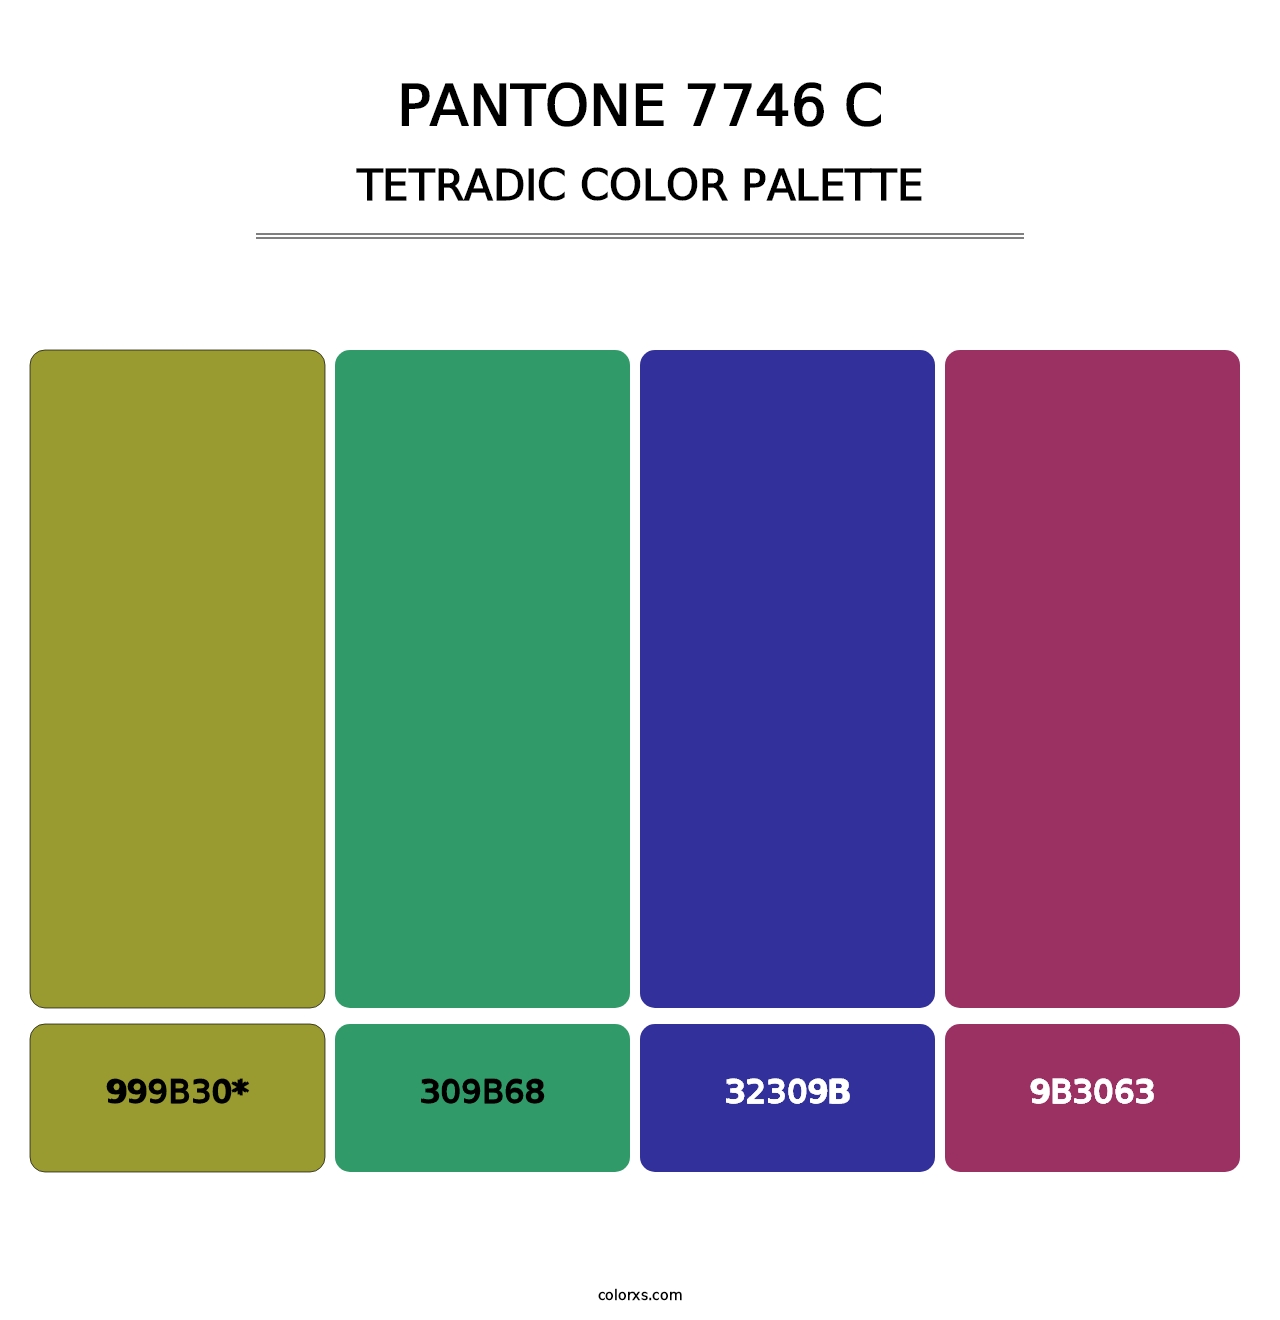 PANTONE 7746 C - Tetradic Color Palette